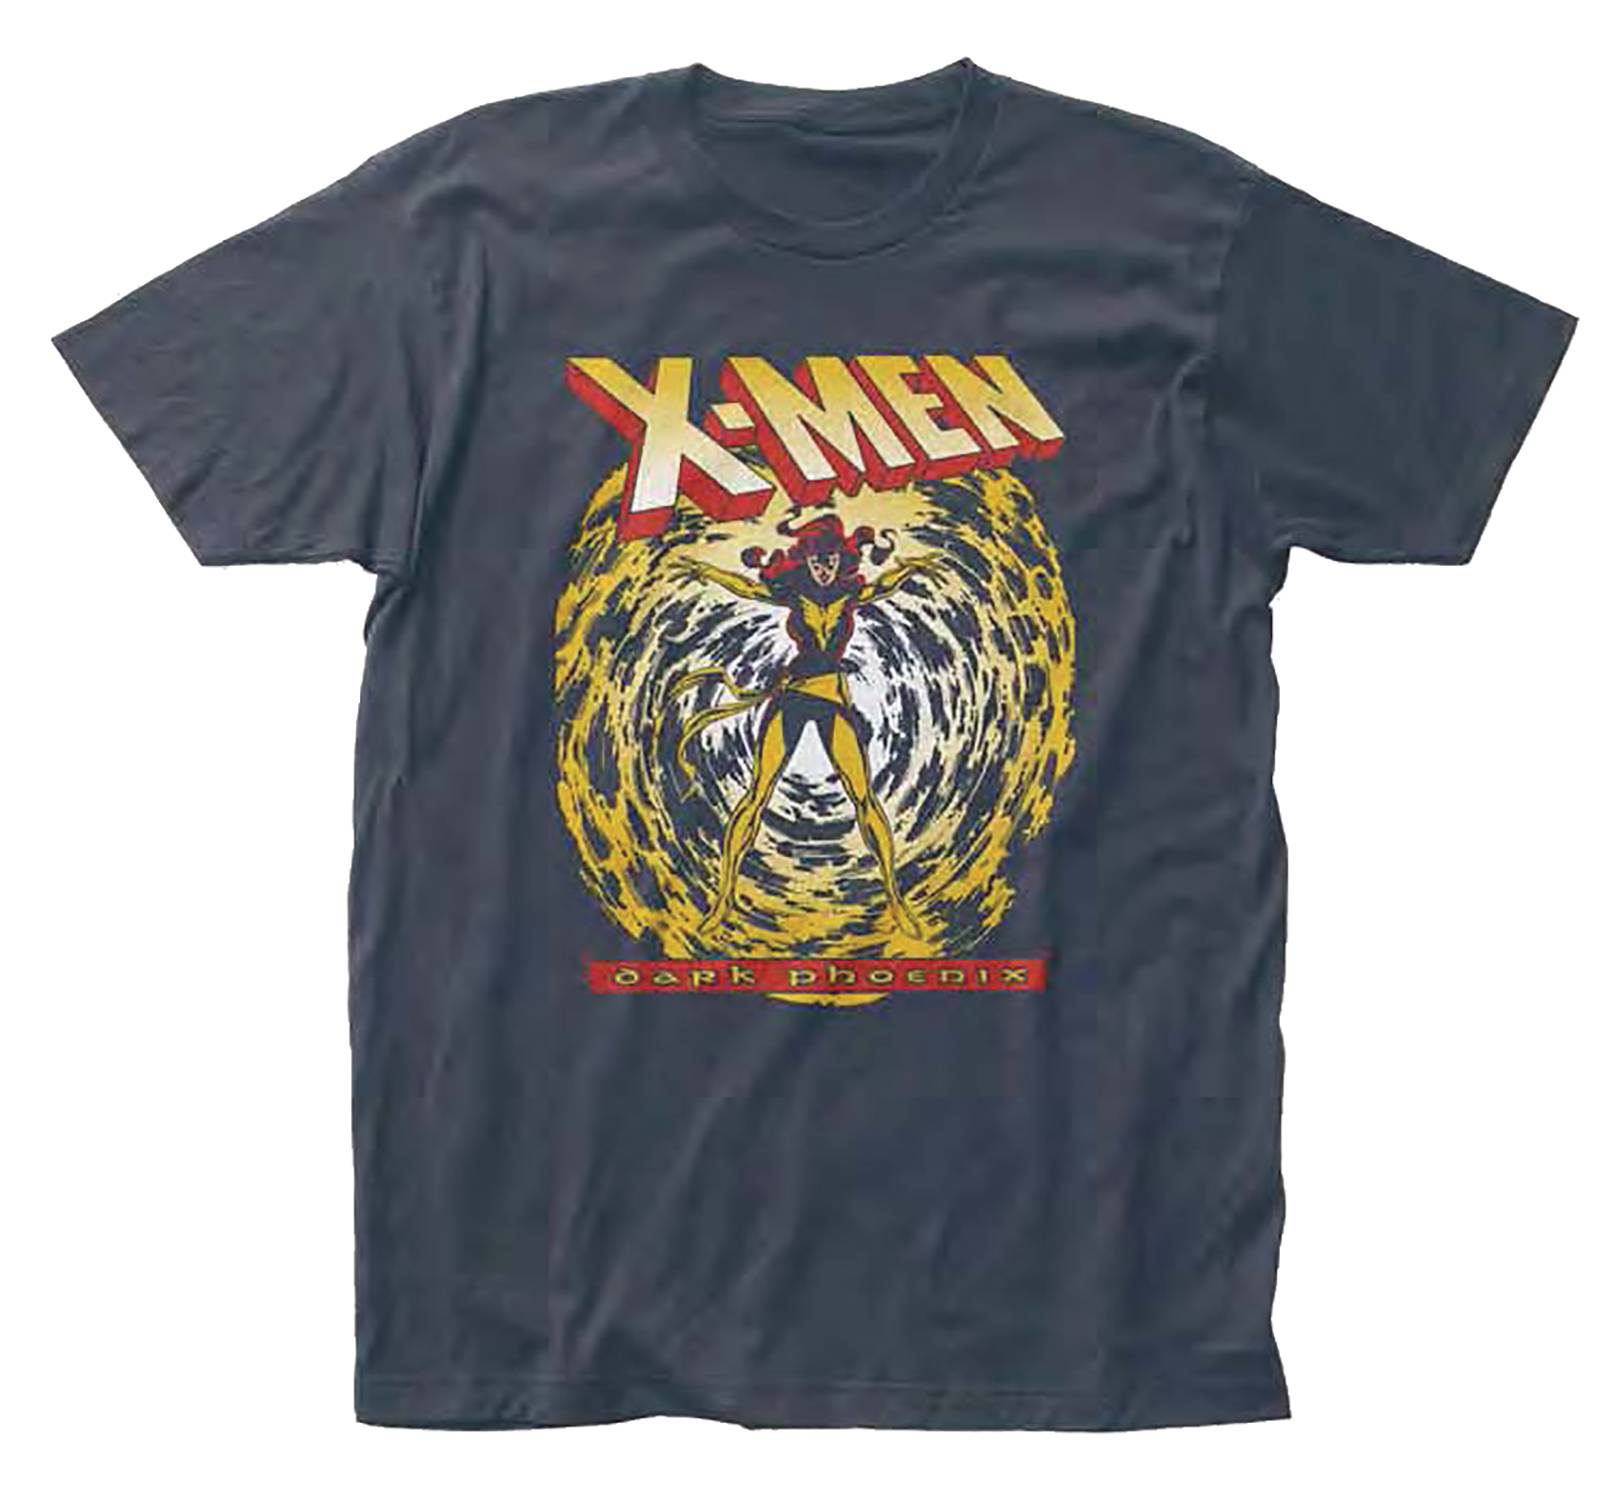 Marvel Heroes Dark Phoenix Px Navy T-Shirt Medium